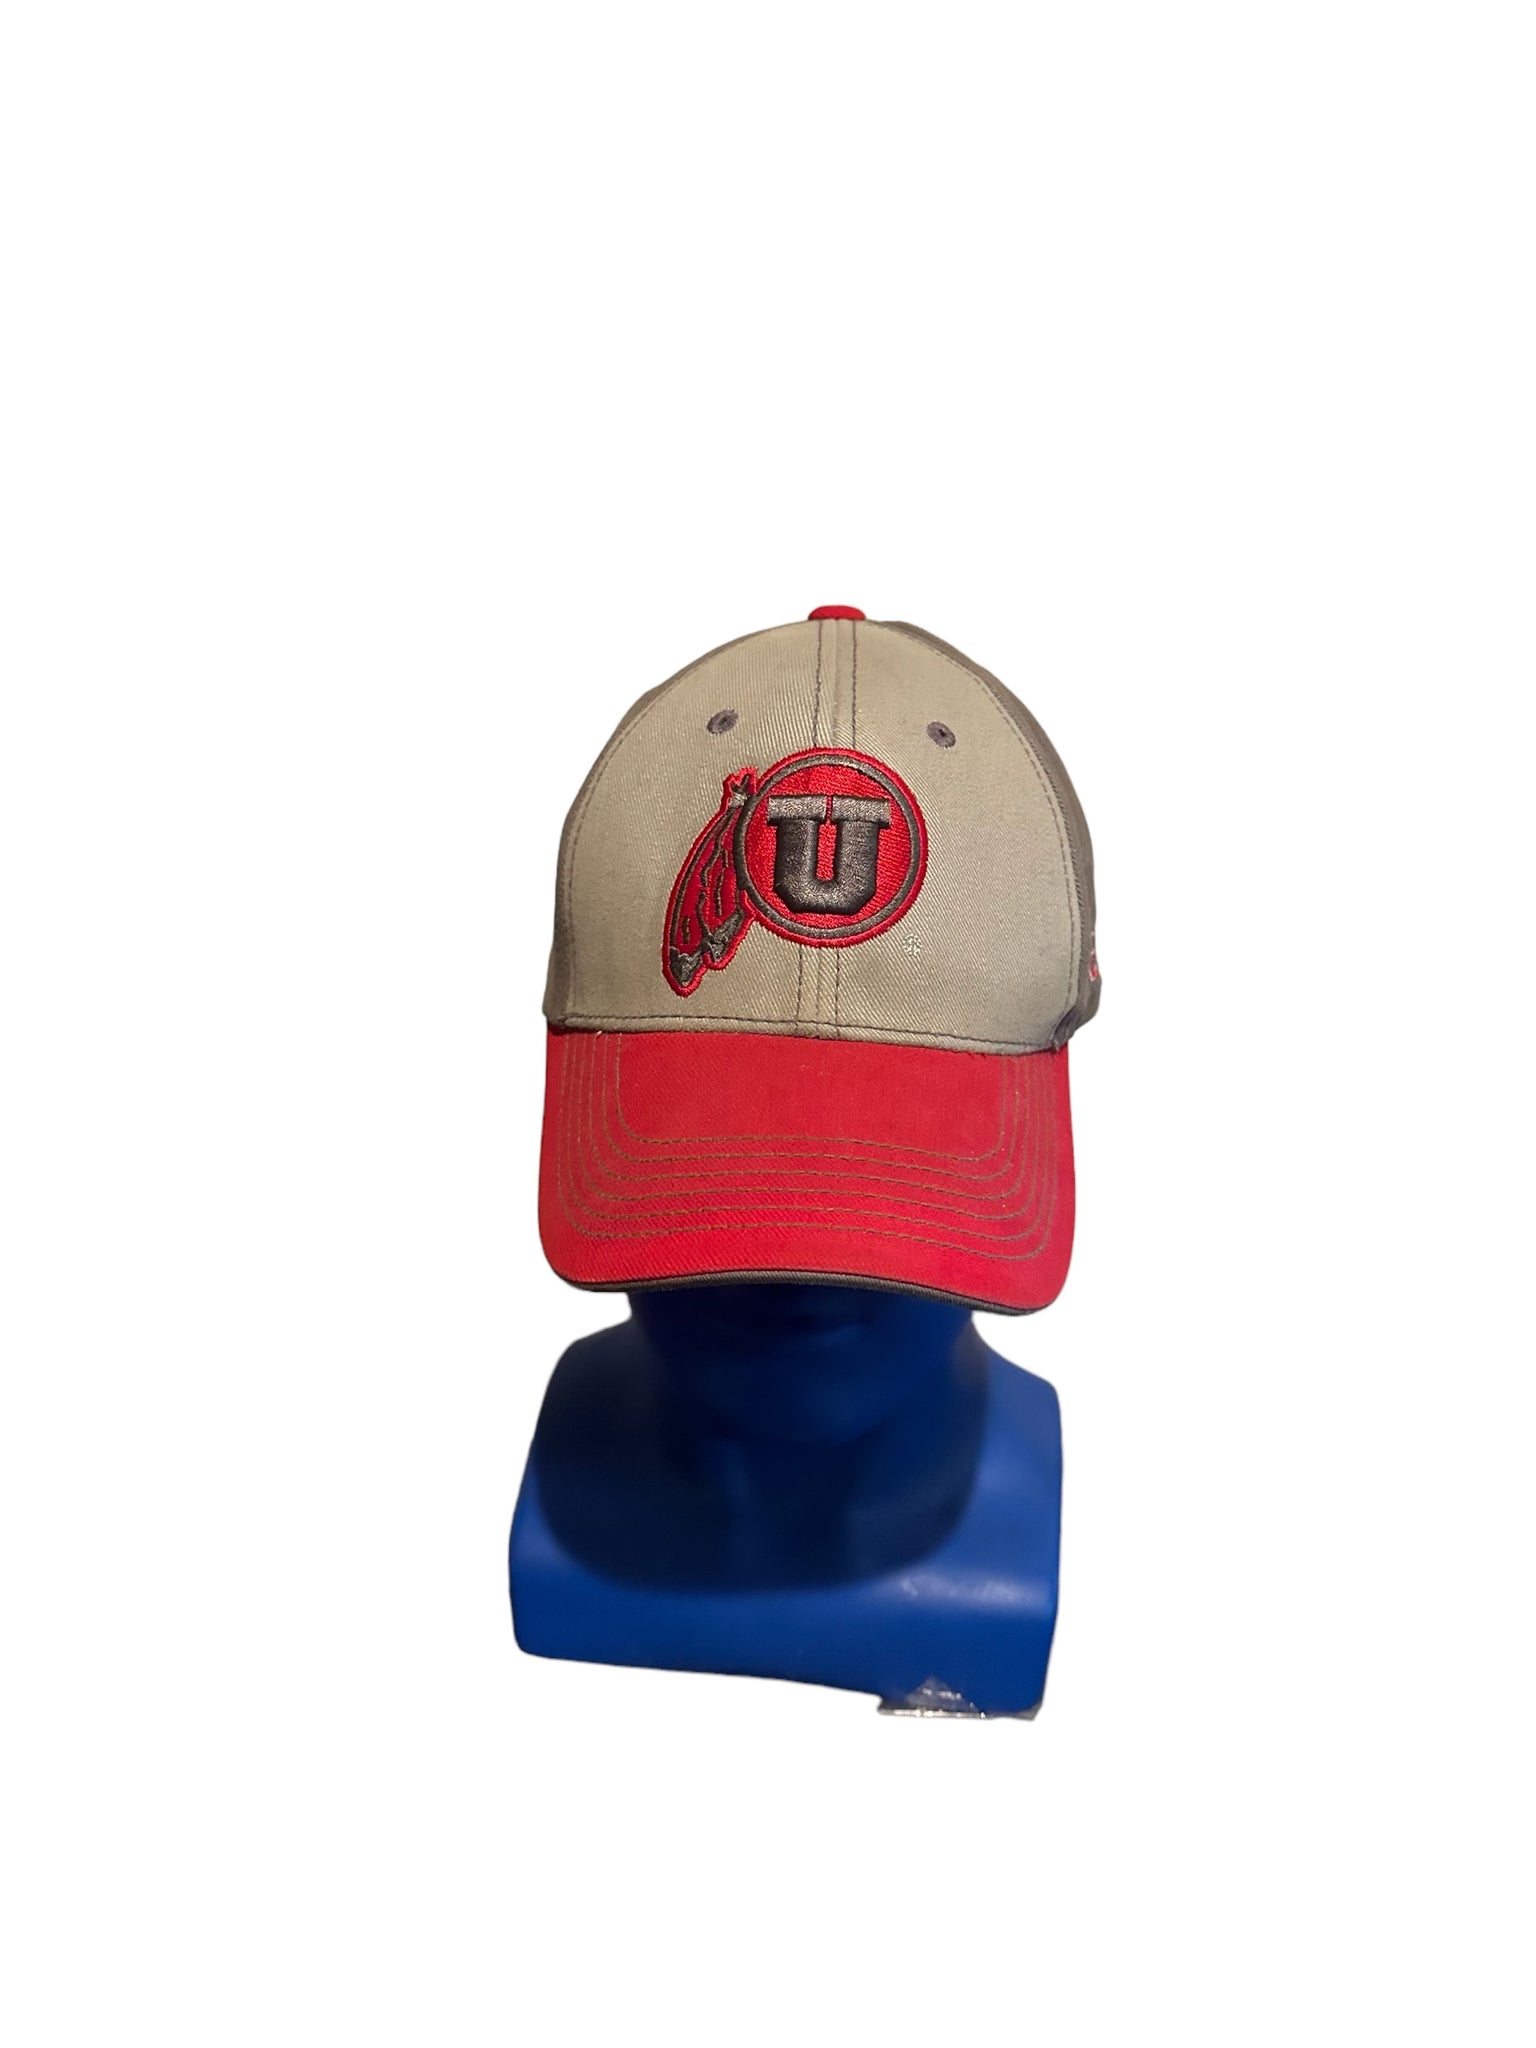 UNIVERSITY OF UTAH ADJUSTABLE STRAPBACK CAP HAT BY CAPTIVATING HEADGEAR Nice